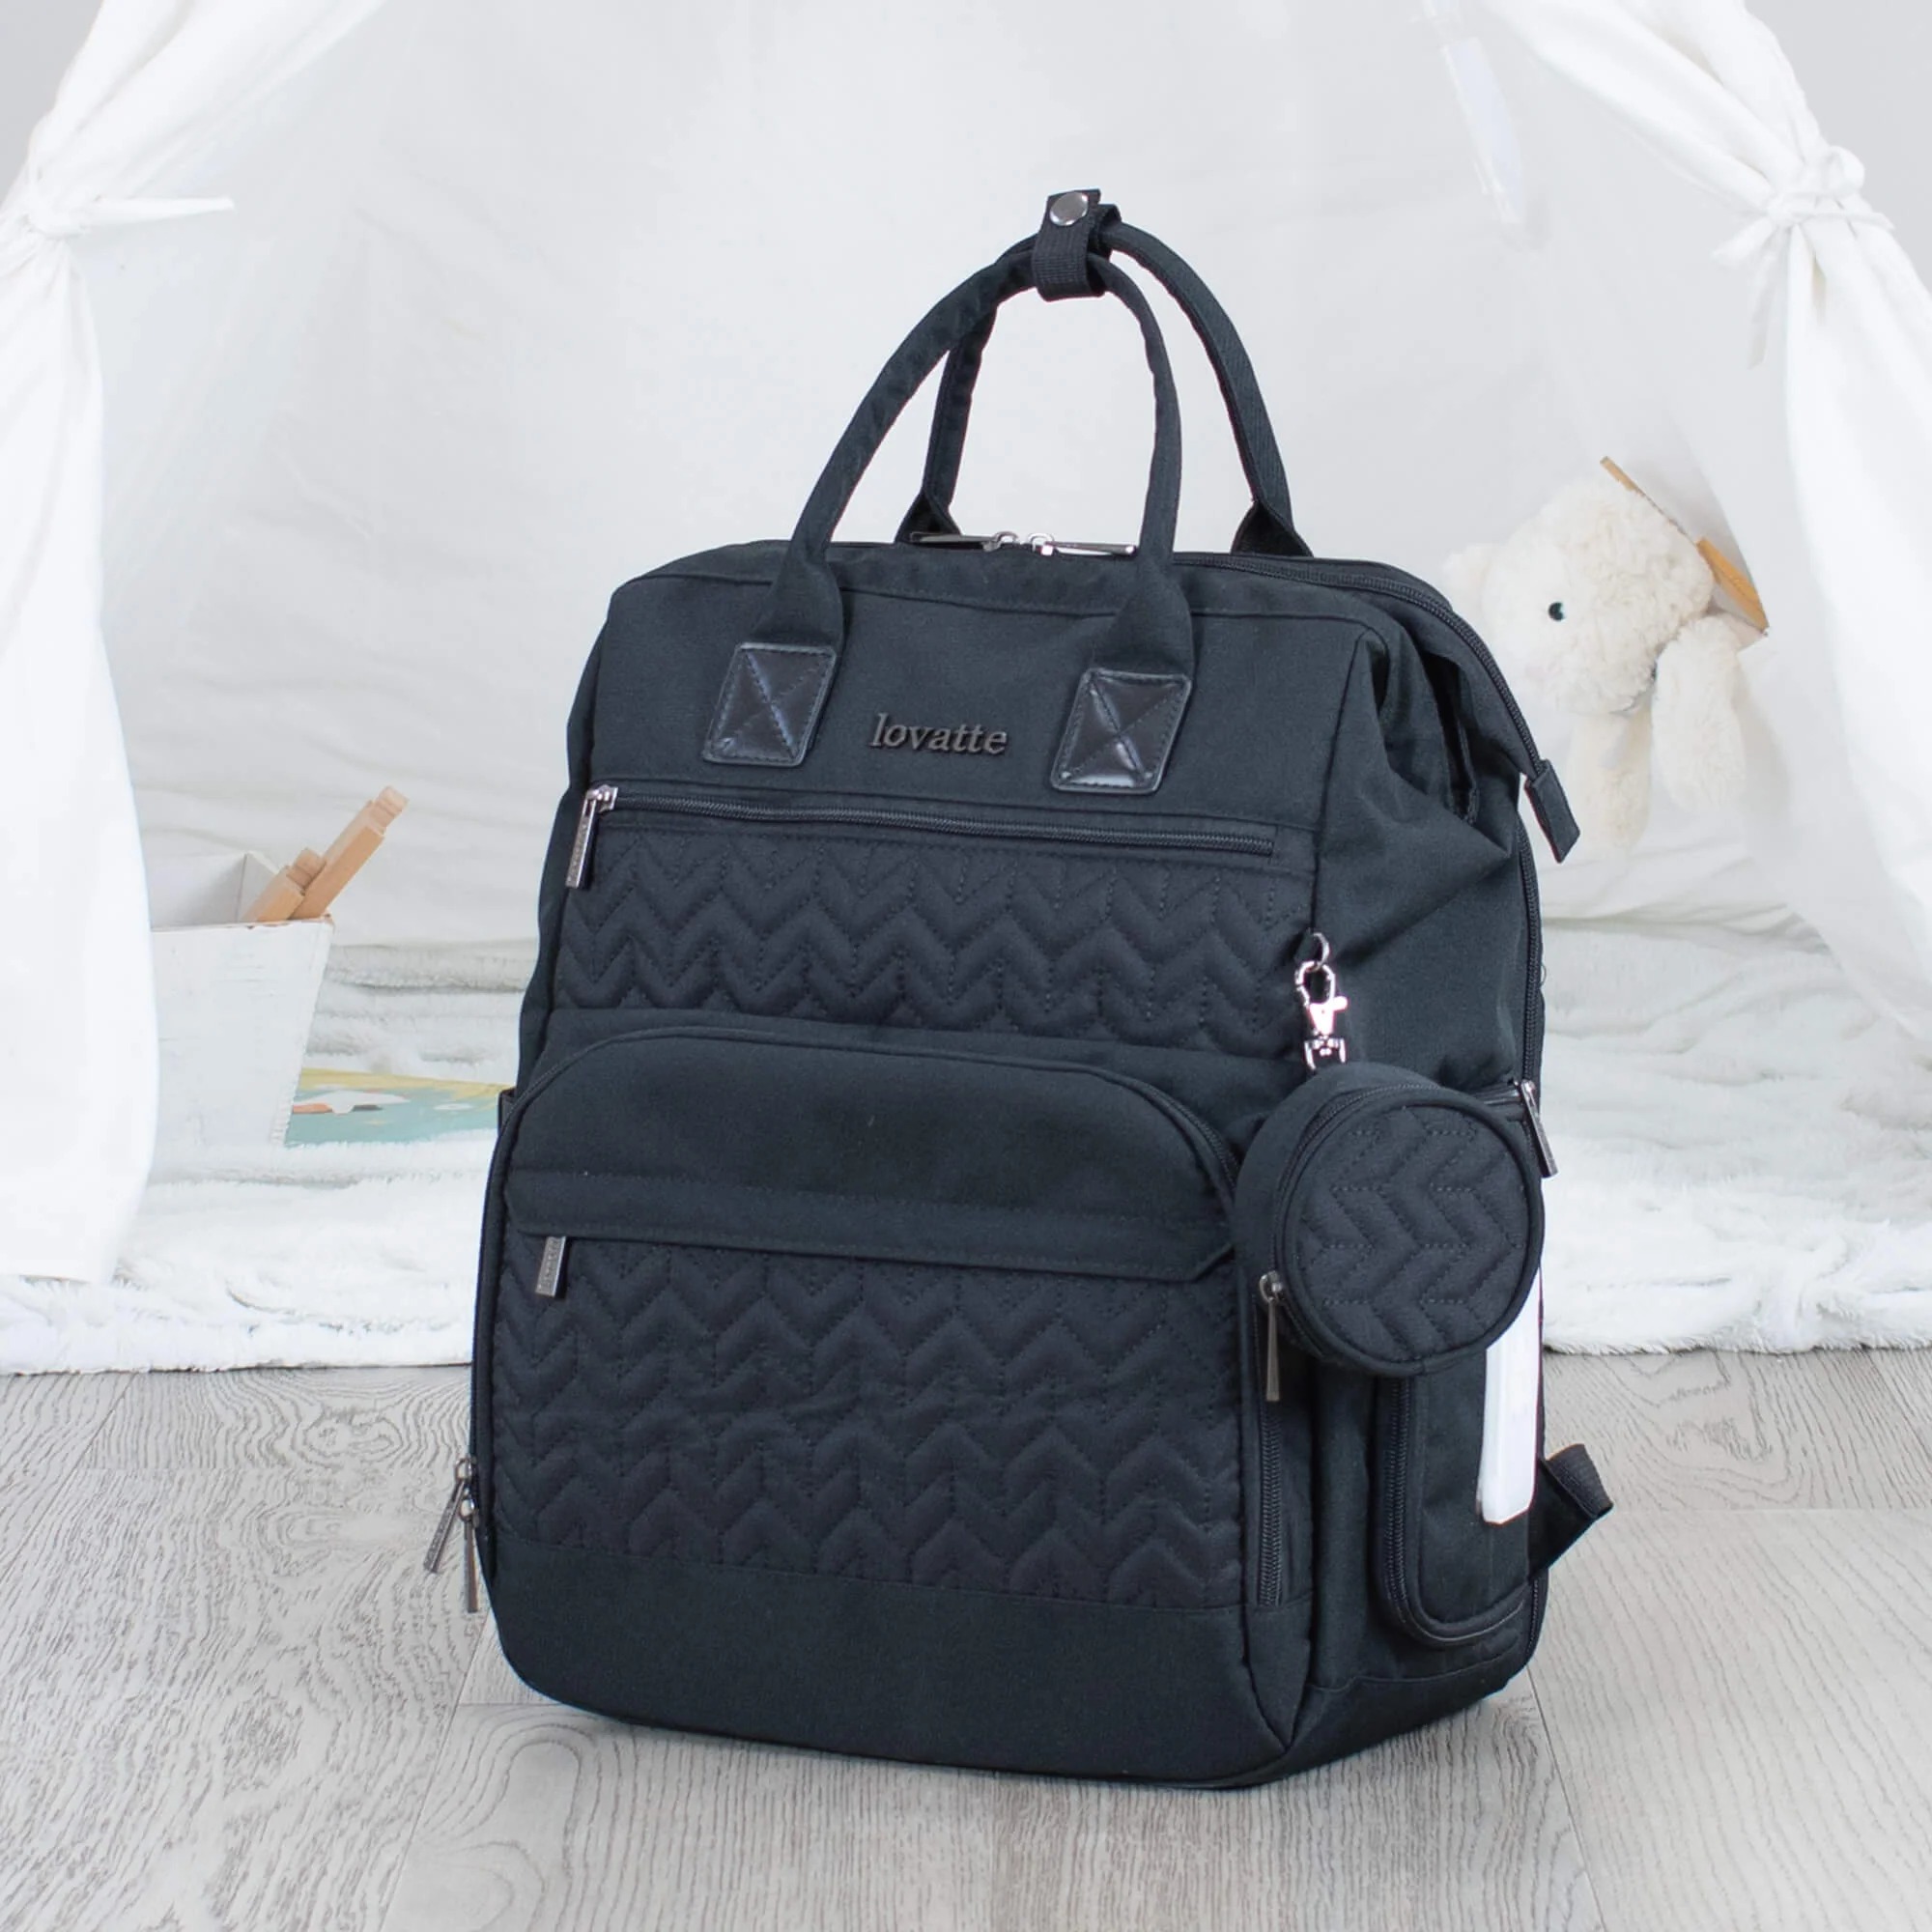 How a Black Backpack Diaper Bag Can Make Parenting Easier